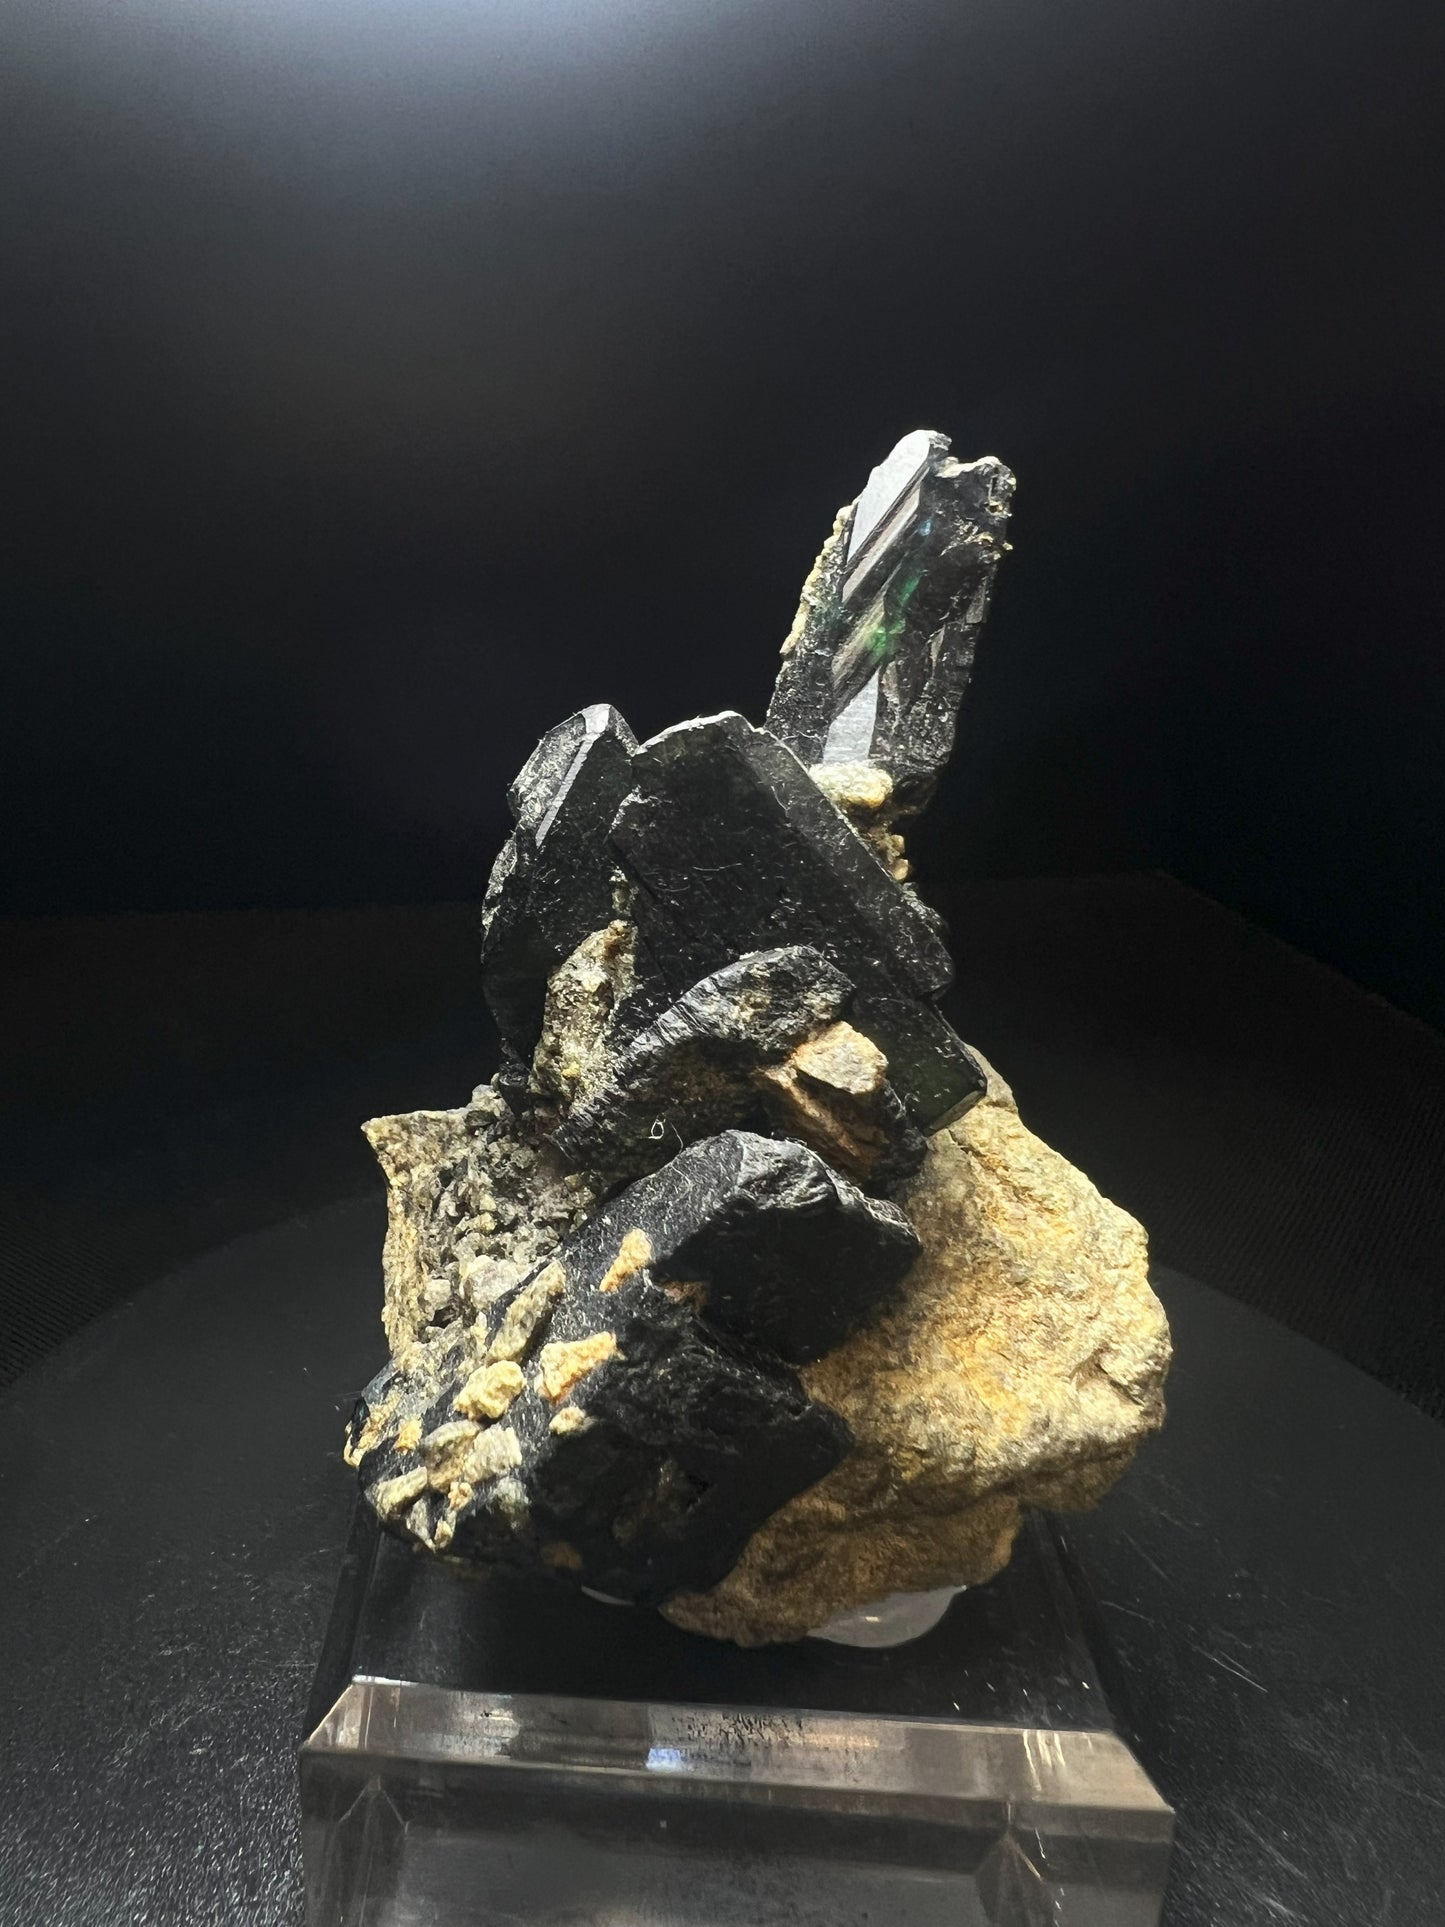 Complete Natural Vivianite Crystals On Matrix From Tomokoni Mine, Bolivia - Collectors Piece, Statement Piece, Home Décor